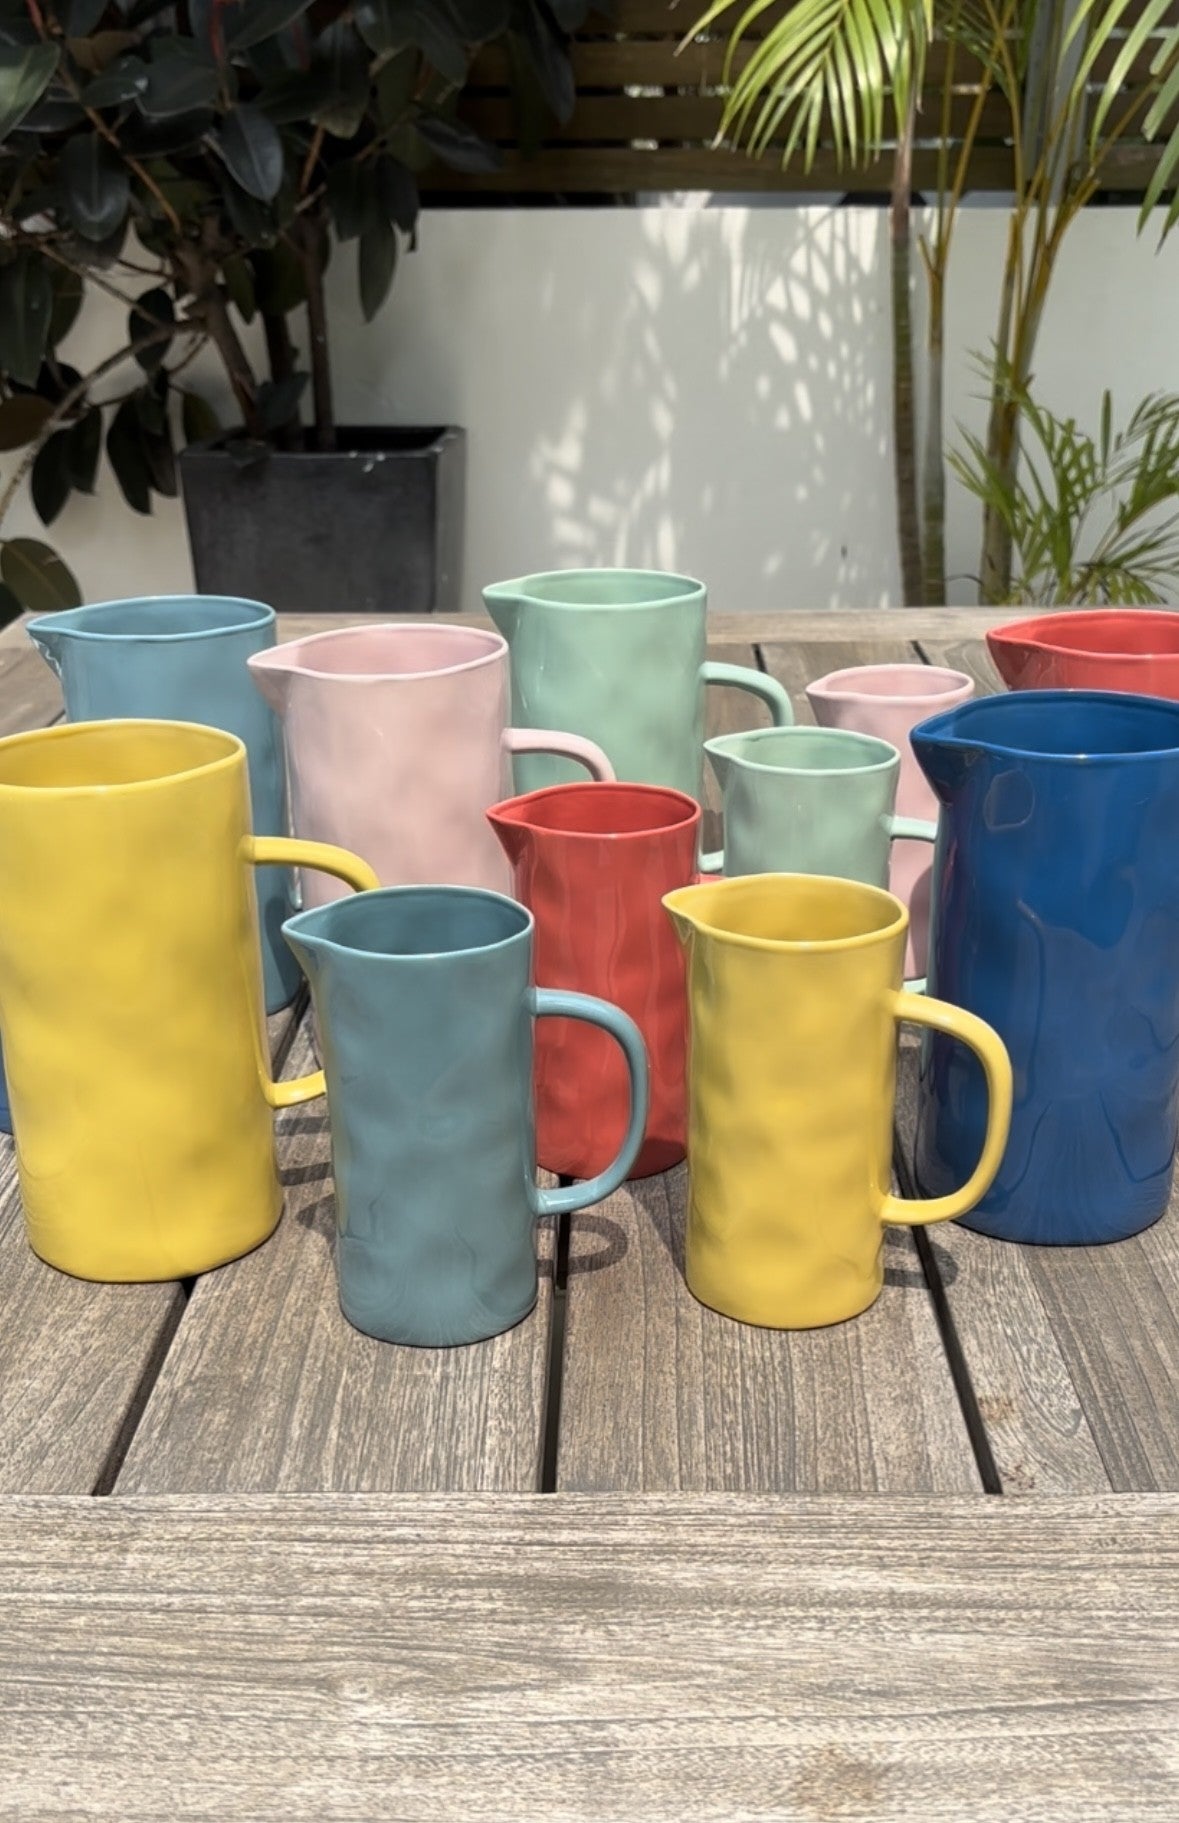 A range of colourful jugs